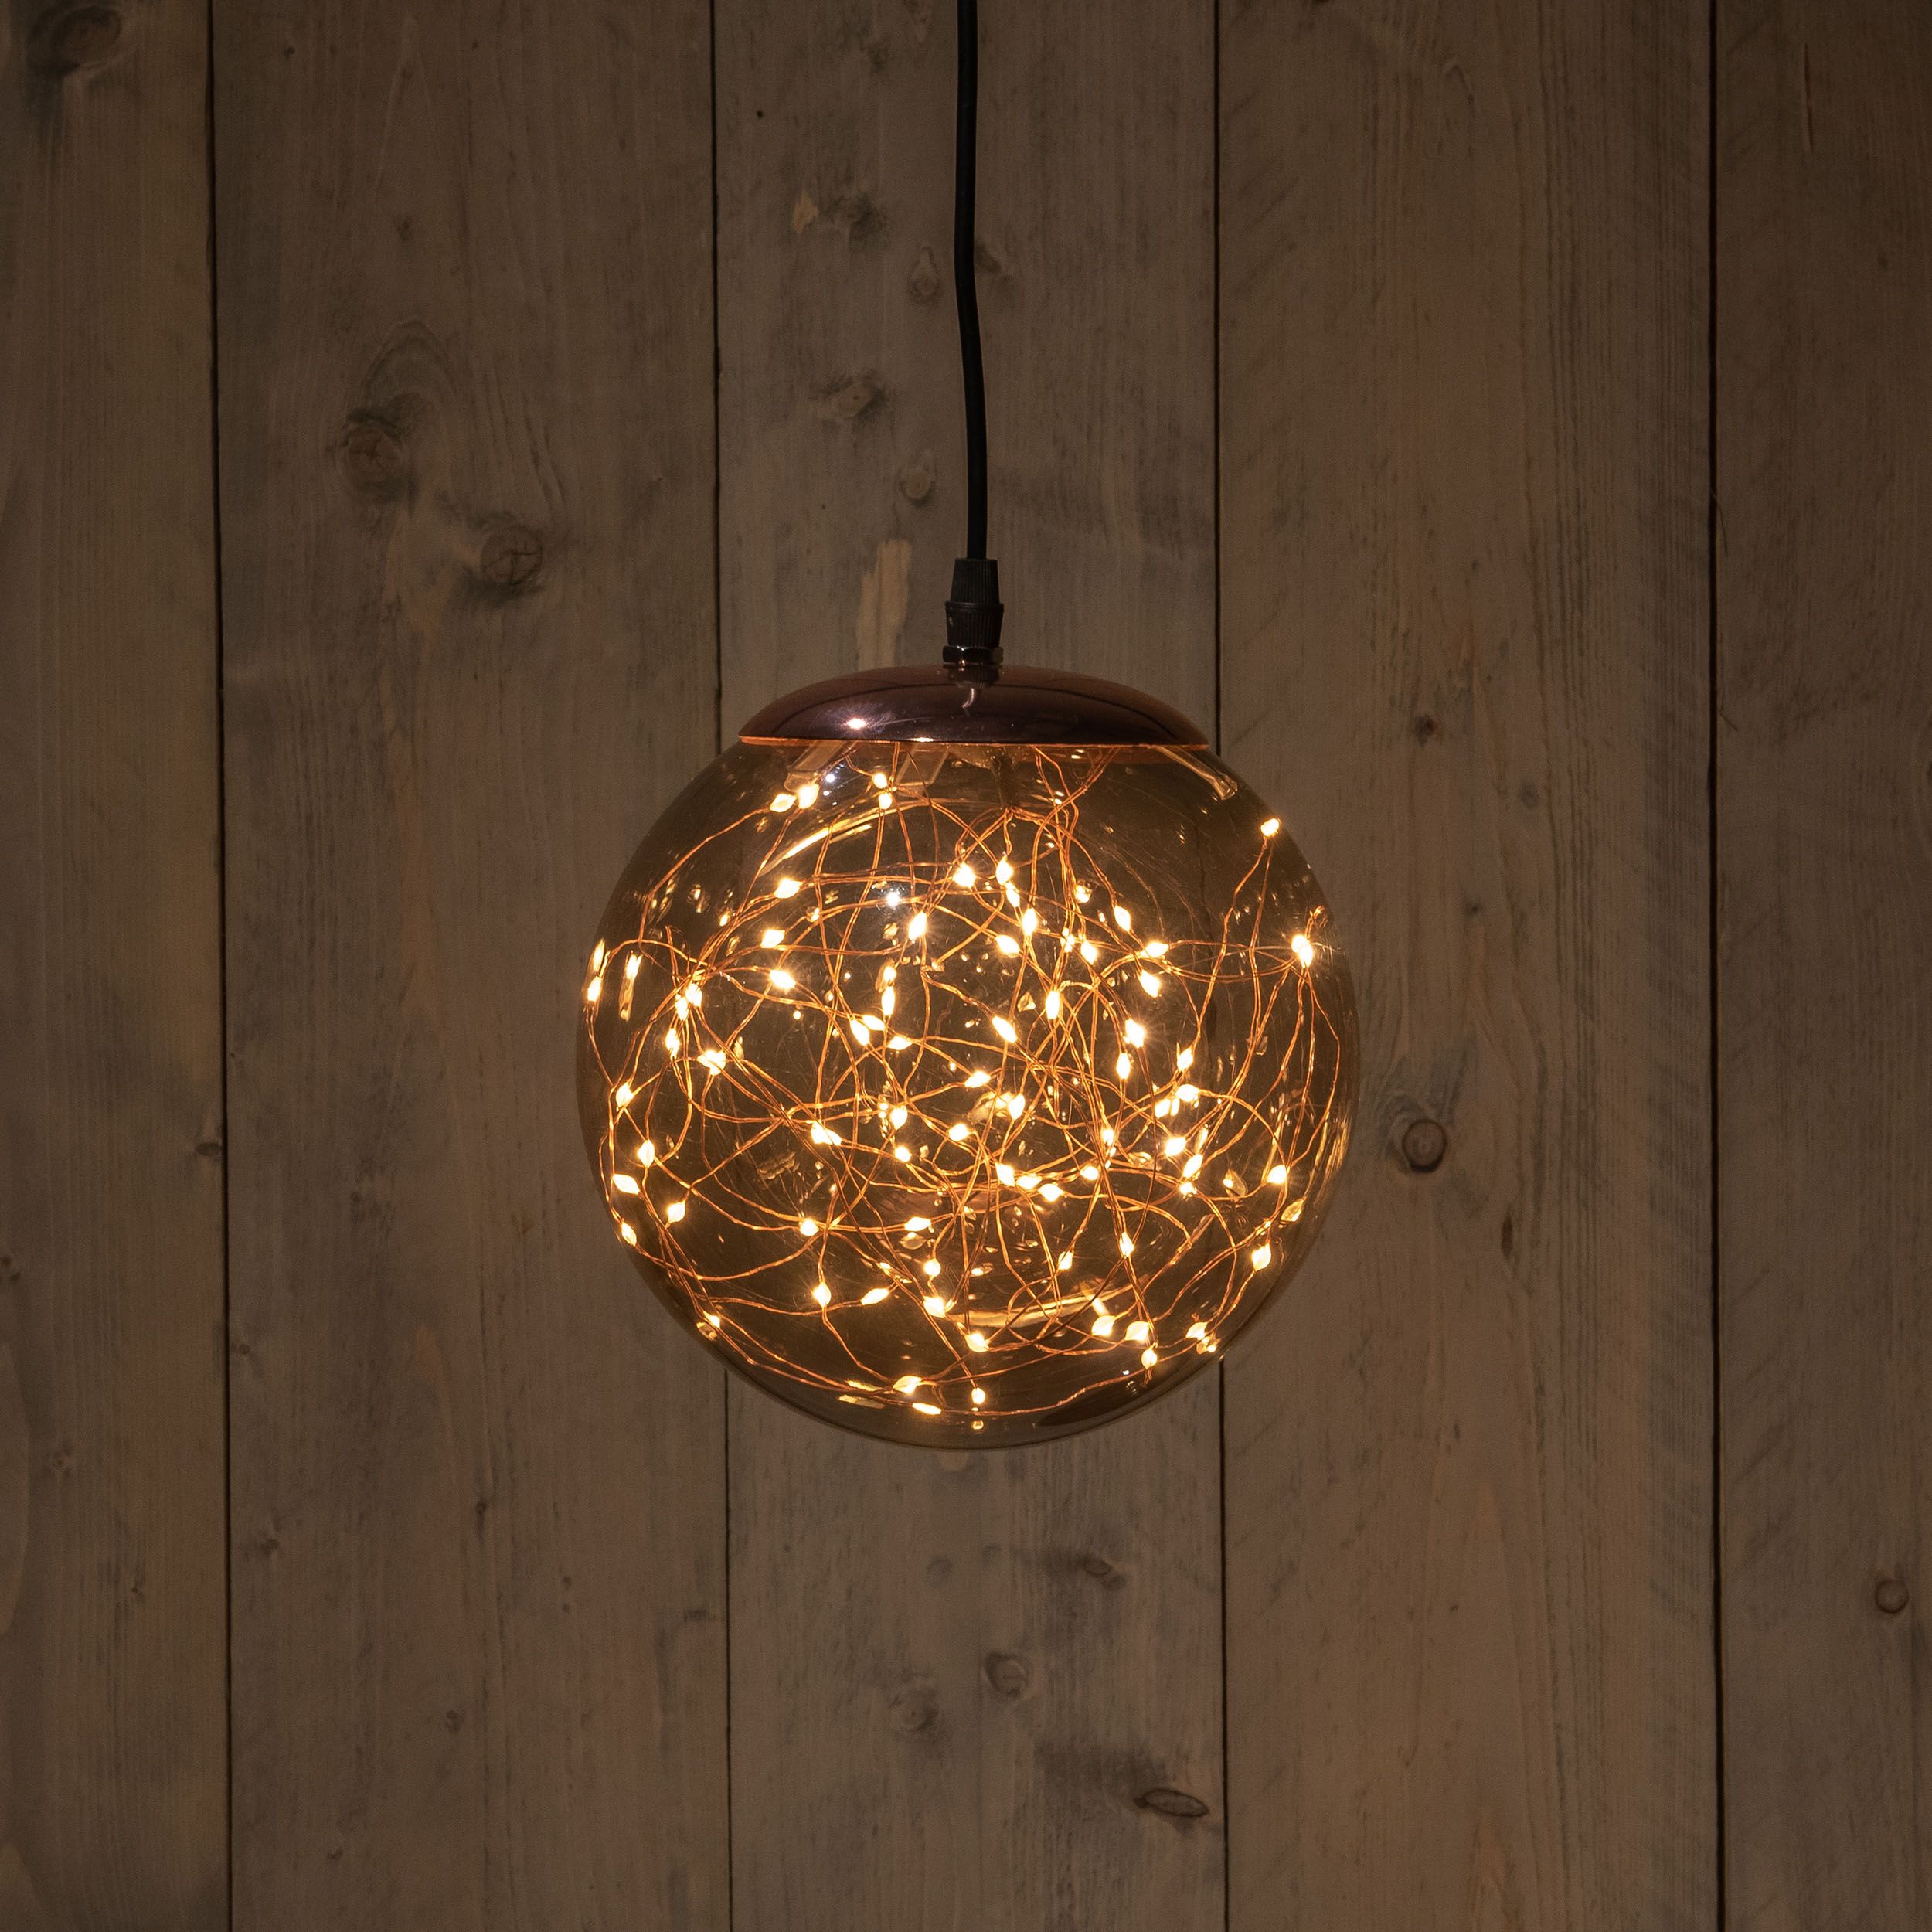 Smokey Ball Indoor LED Leuchtobjekt